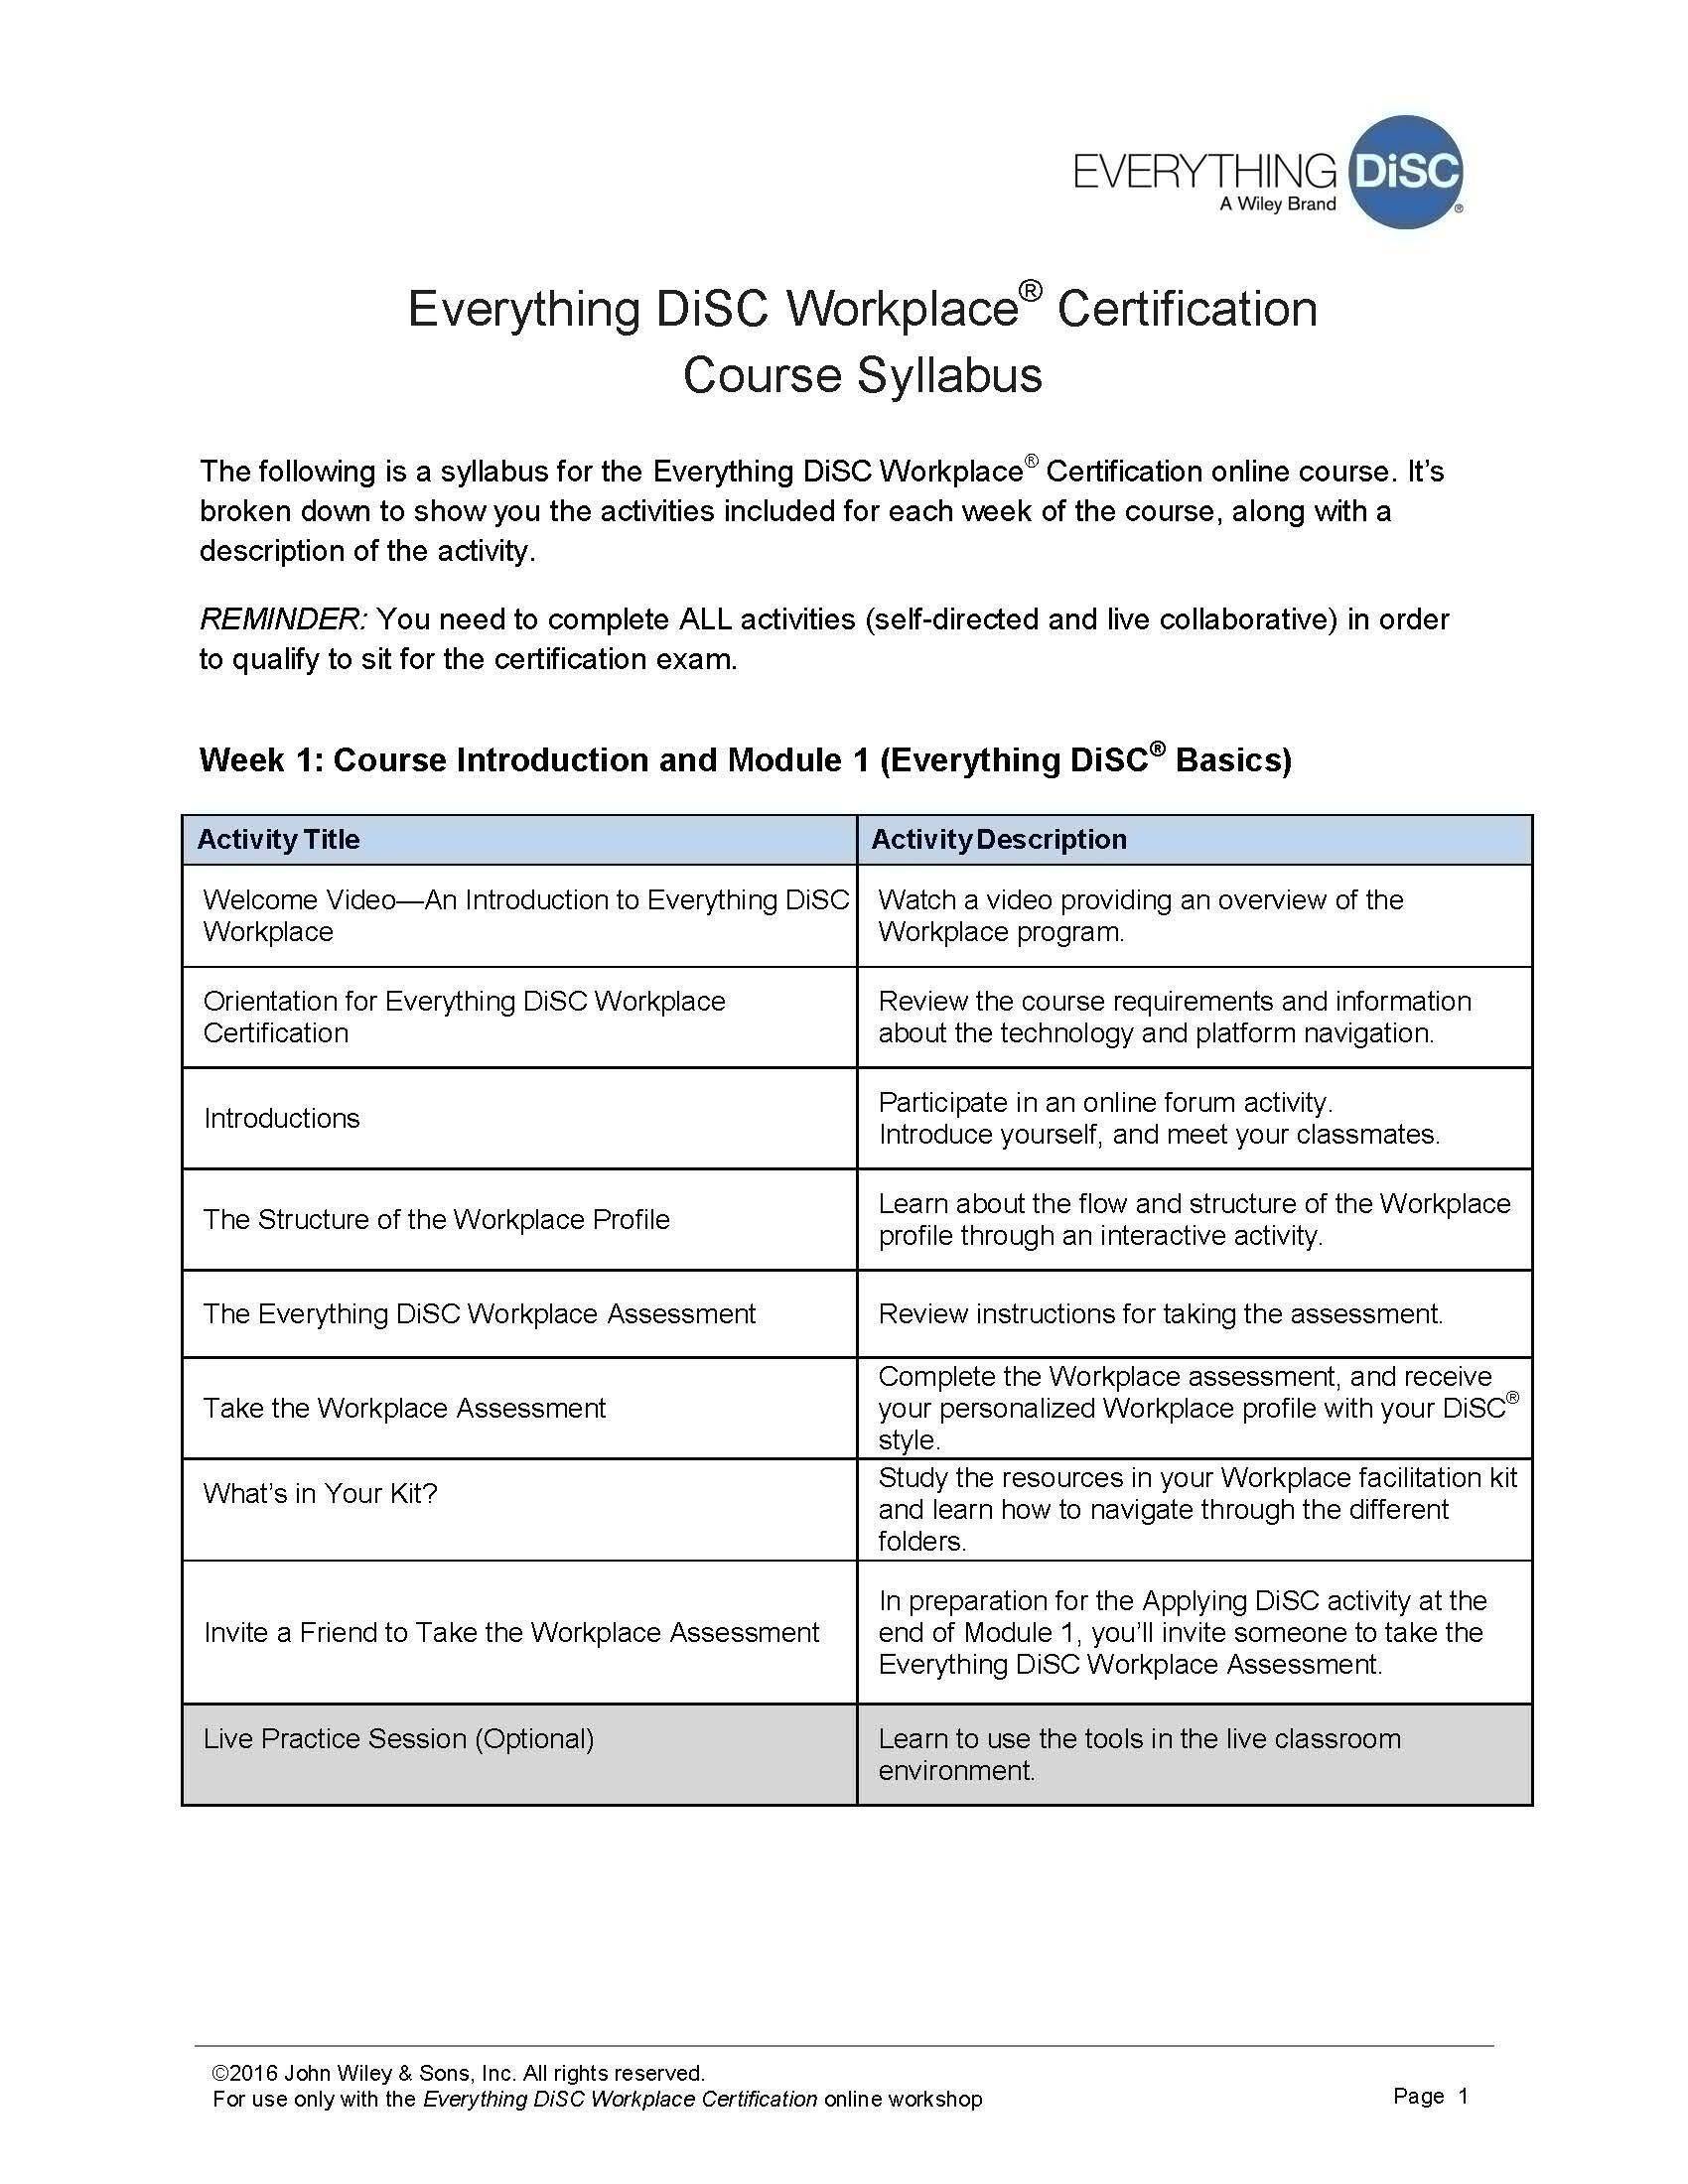 disc certification syllabus inhouse workshop disc partners